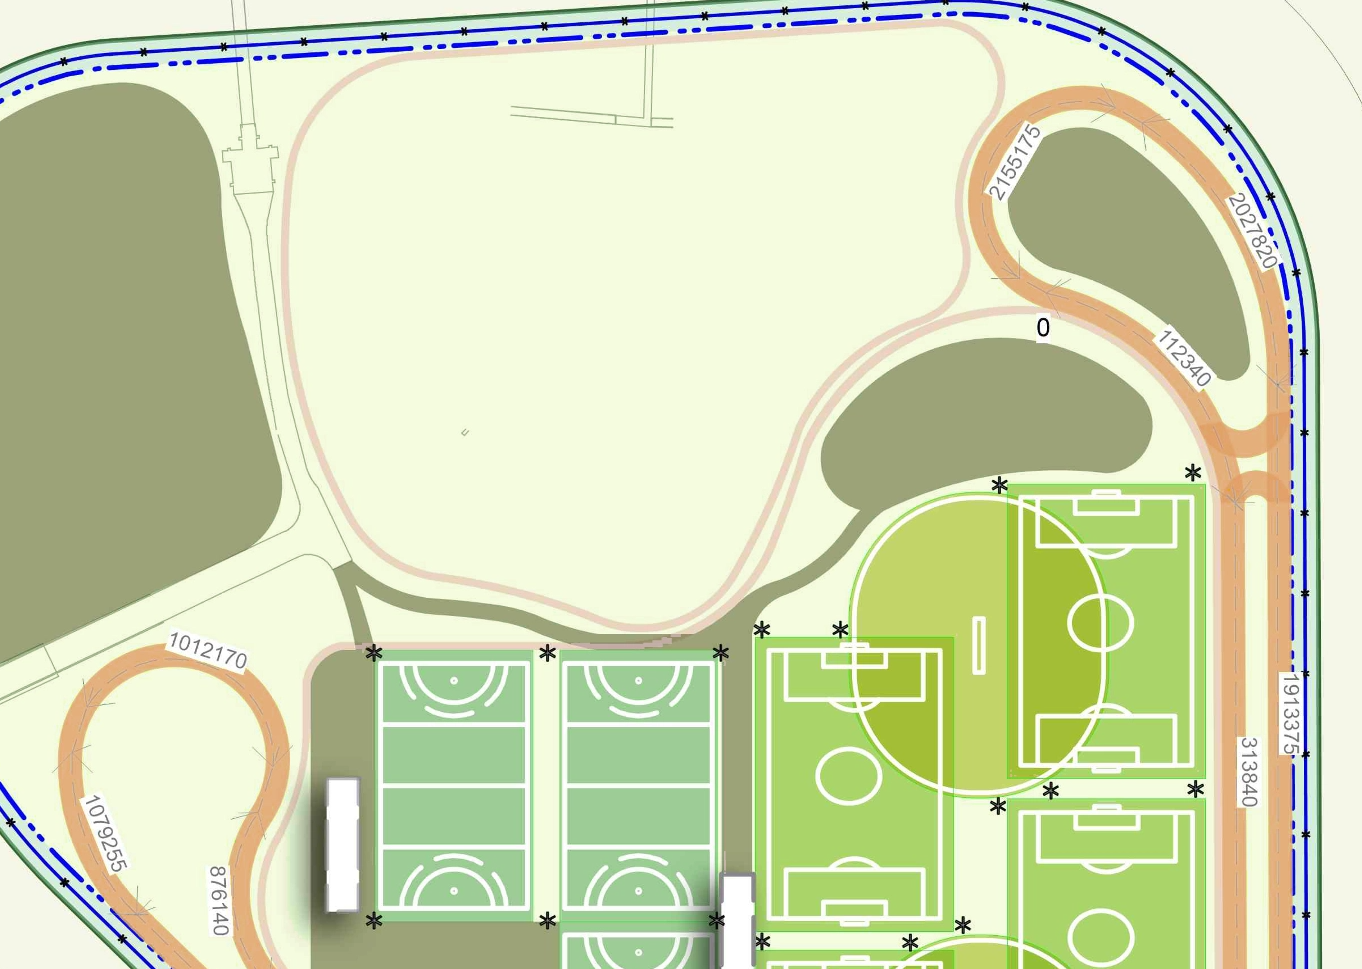 Landscape Play Area Master Plan